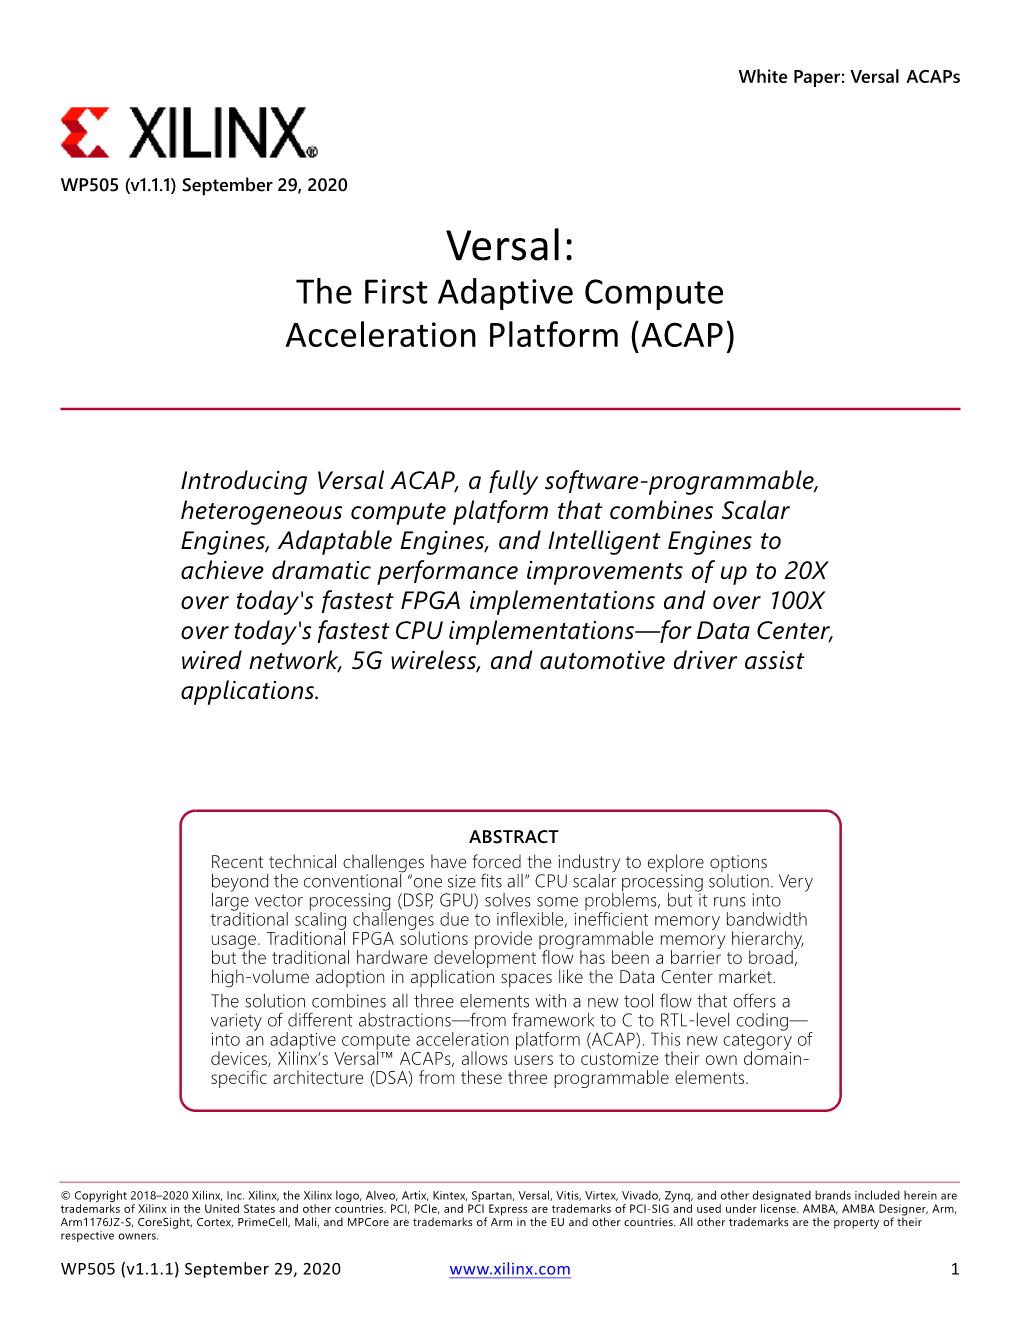 Versal, the First Adaptive Compute Acceleration Platform (ACAP)